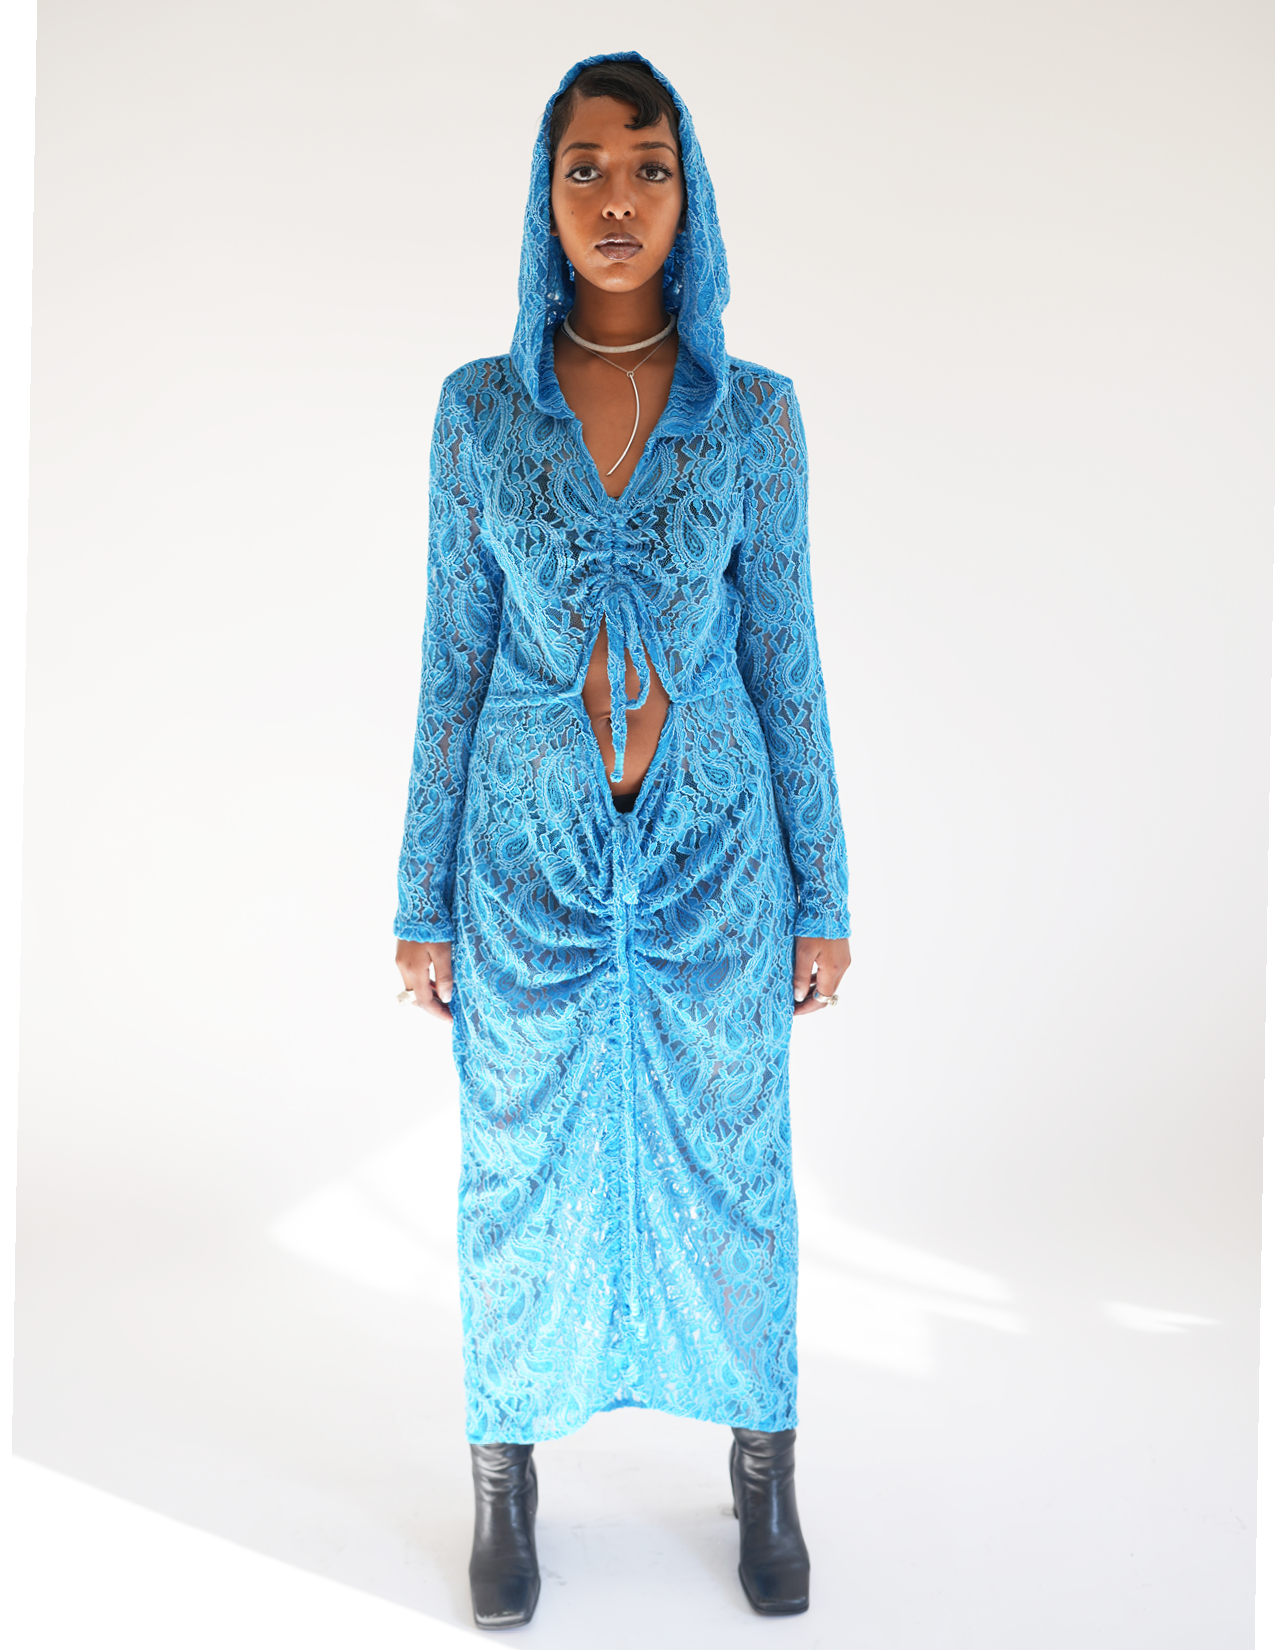 Fola Stretch Blue Lace Hooded Dress